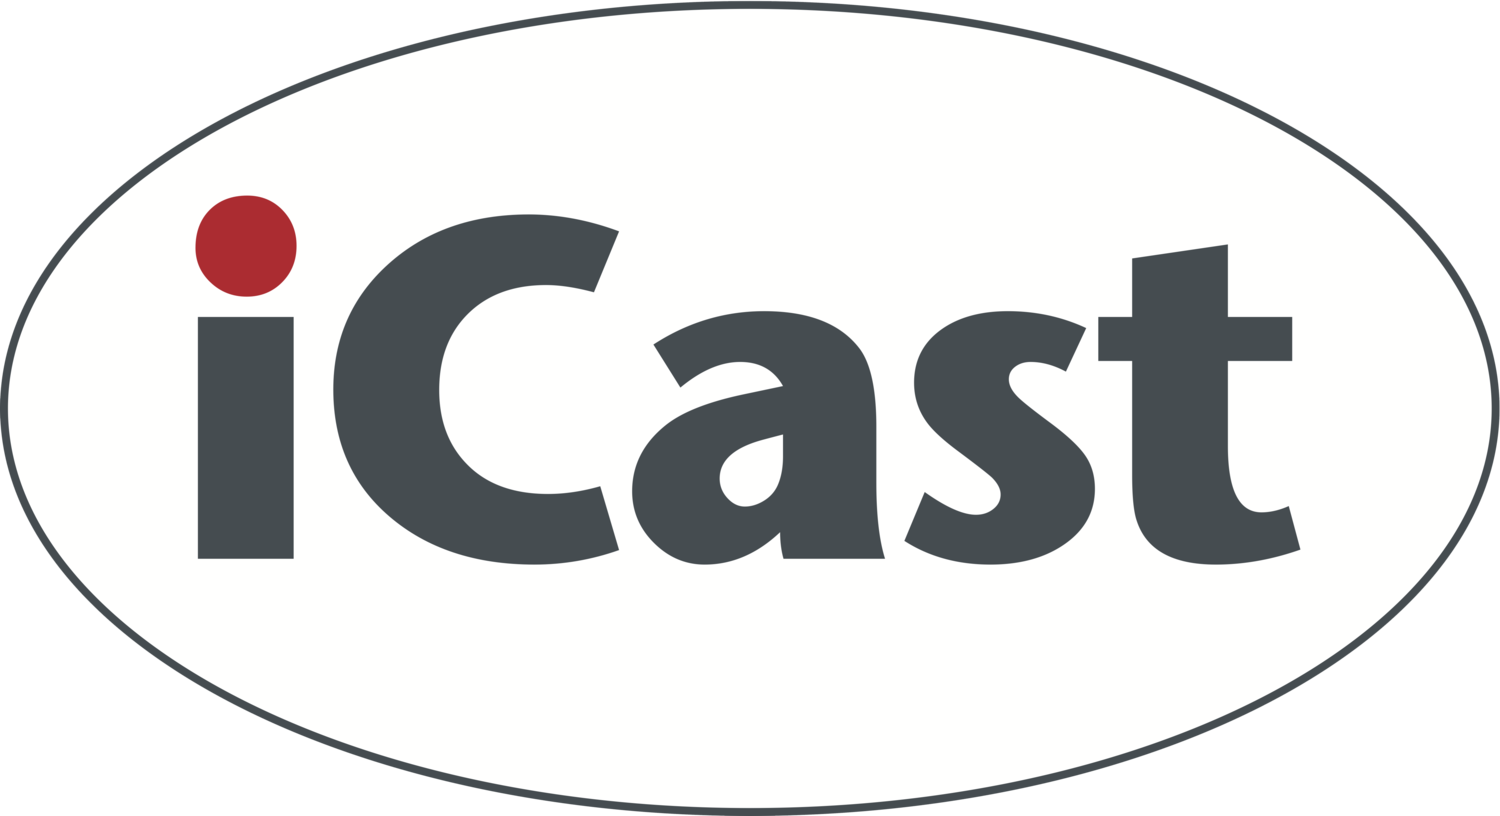 www.icast.se